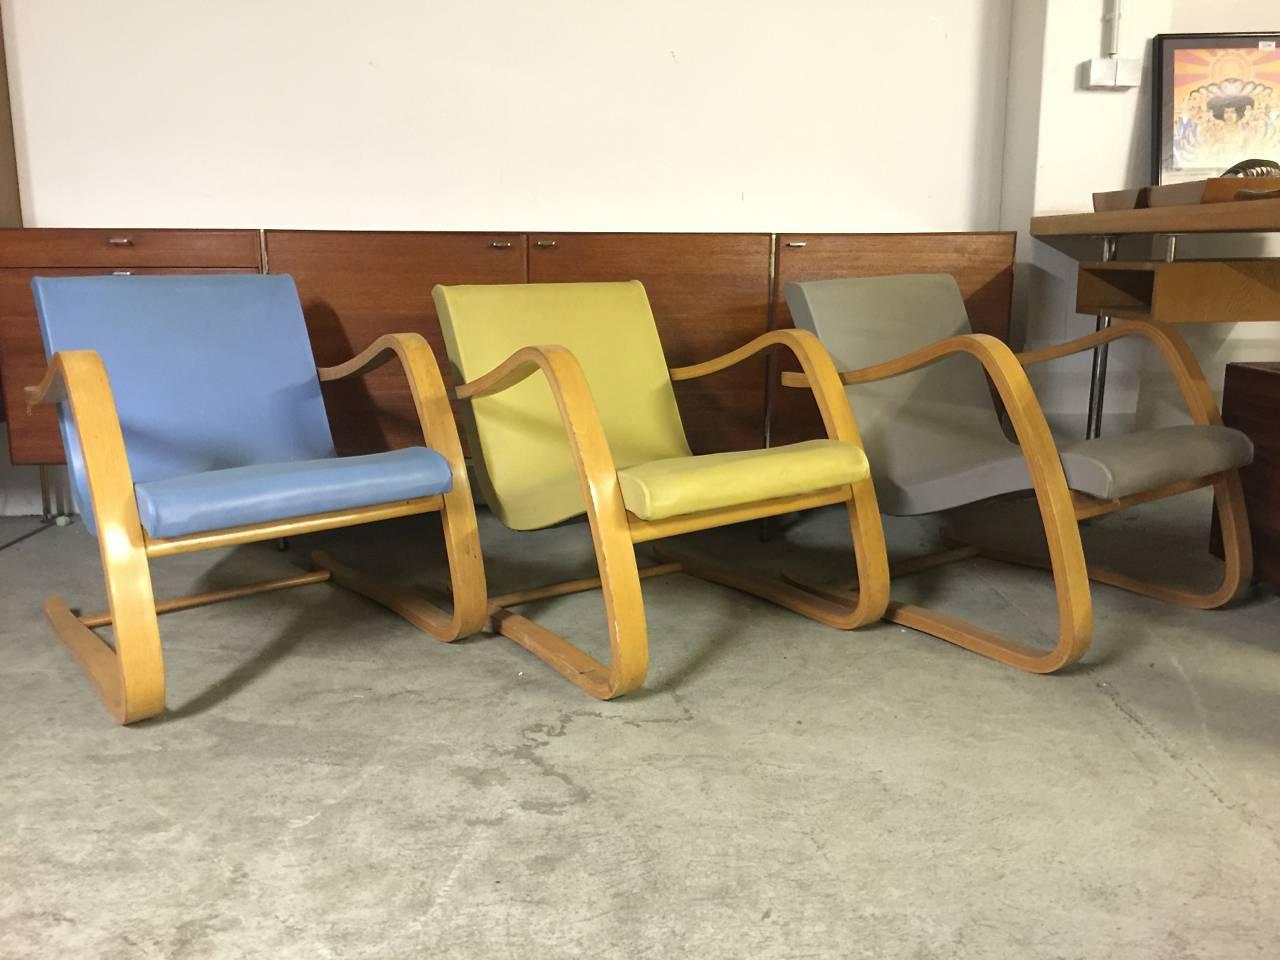 Set of three lounge chairs made by Pforzheimer Bugholzmöbel.

LOCATED IN HAMBURG